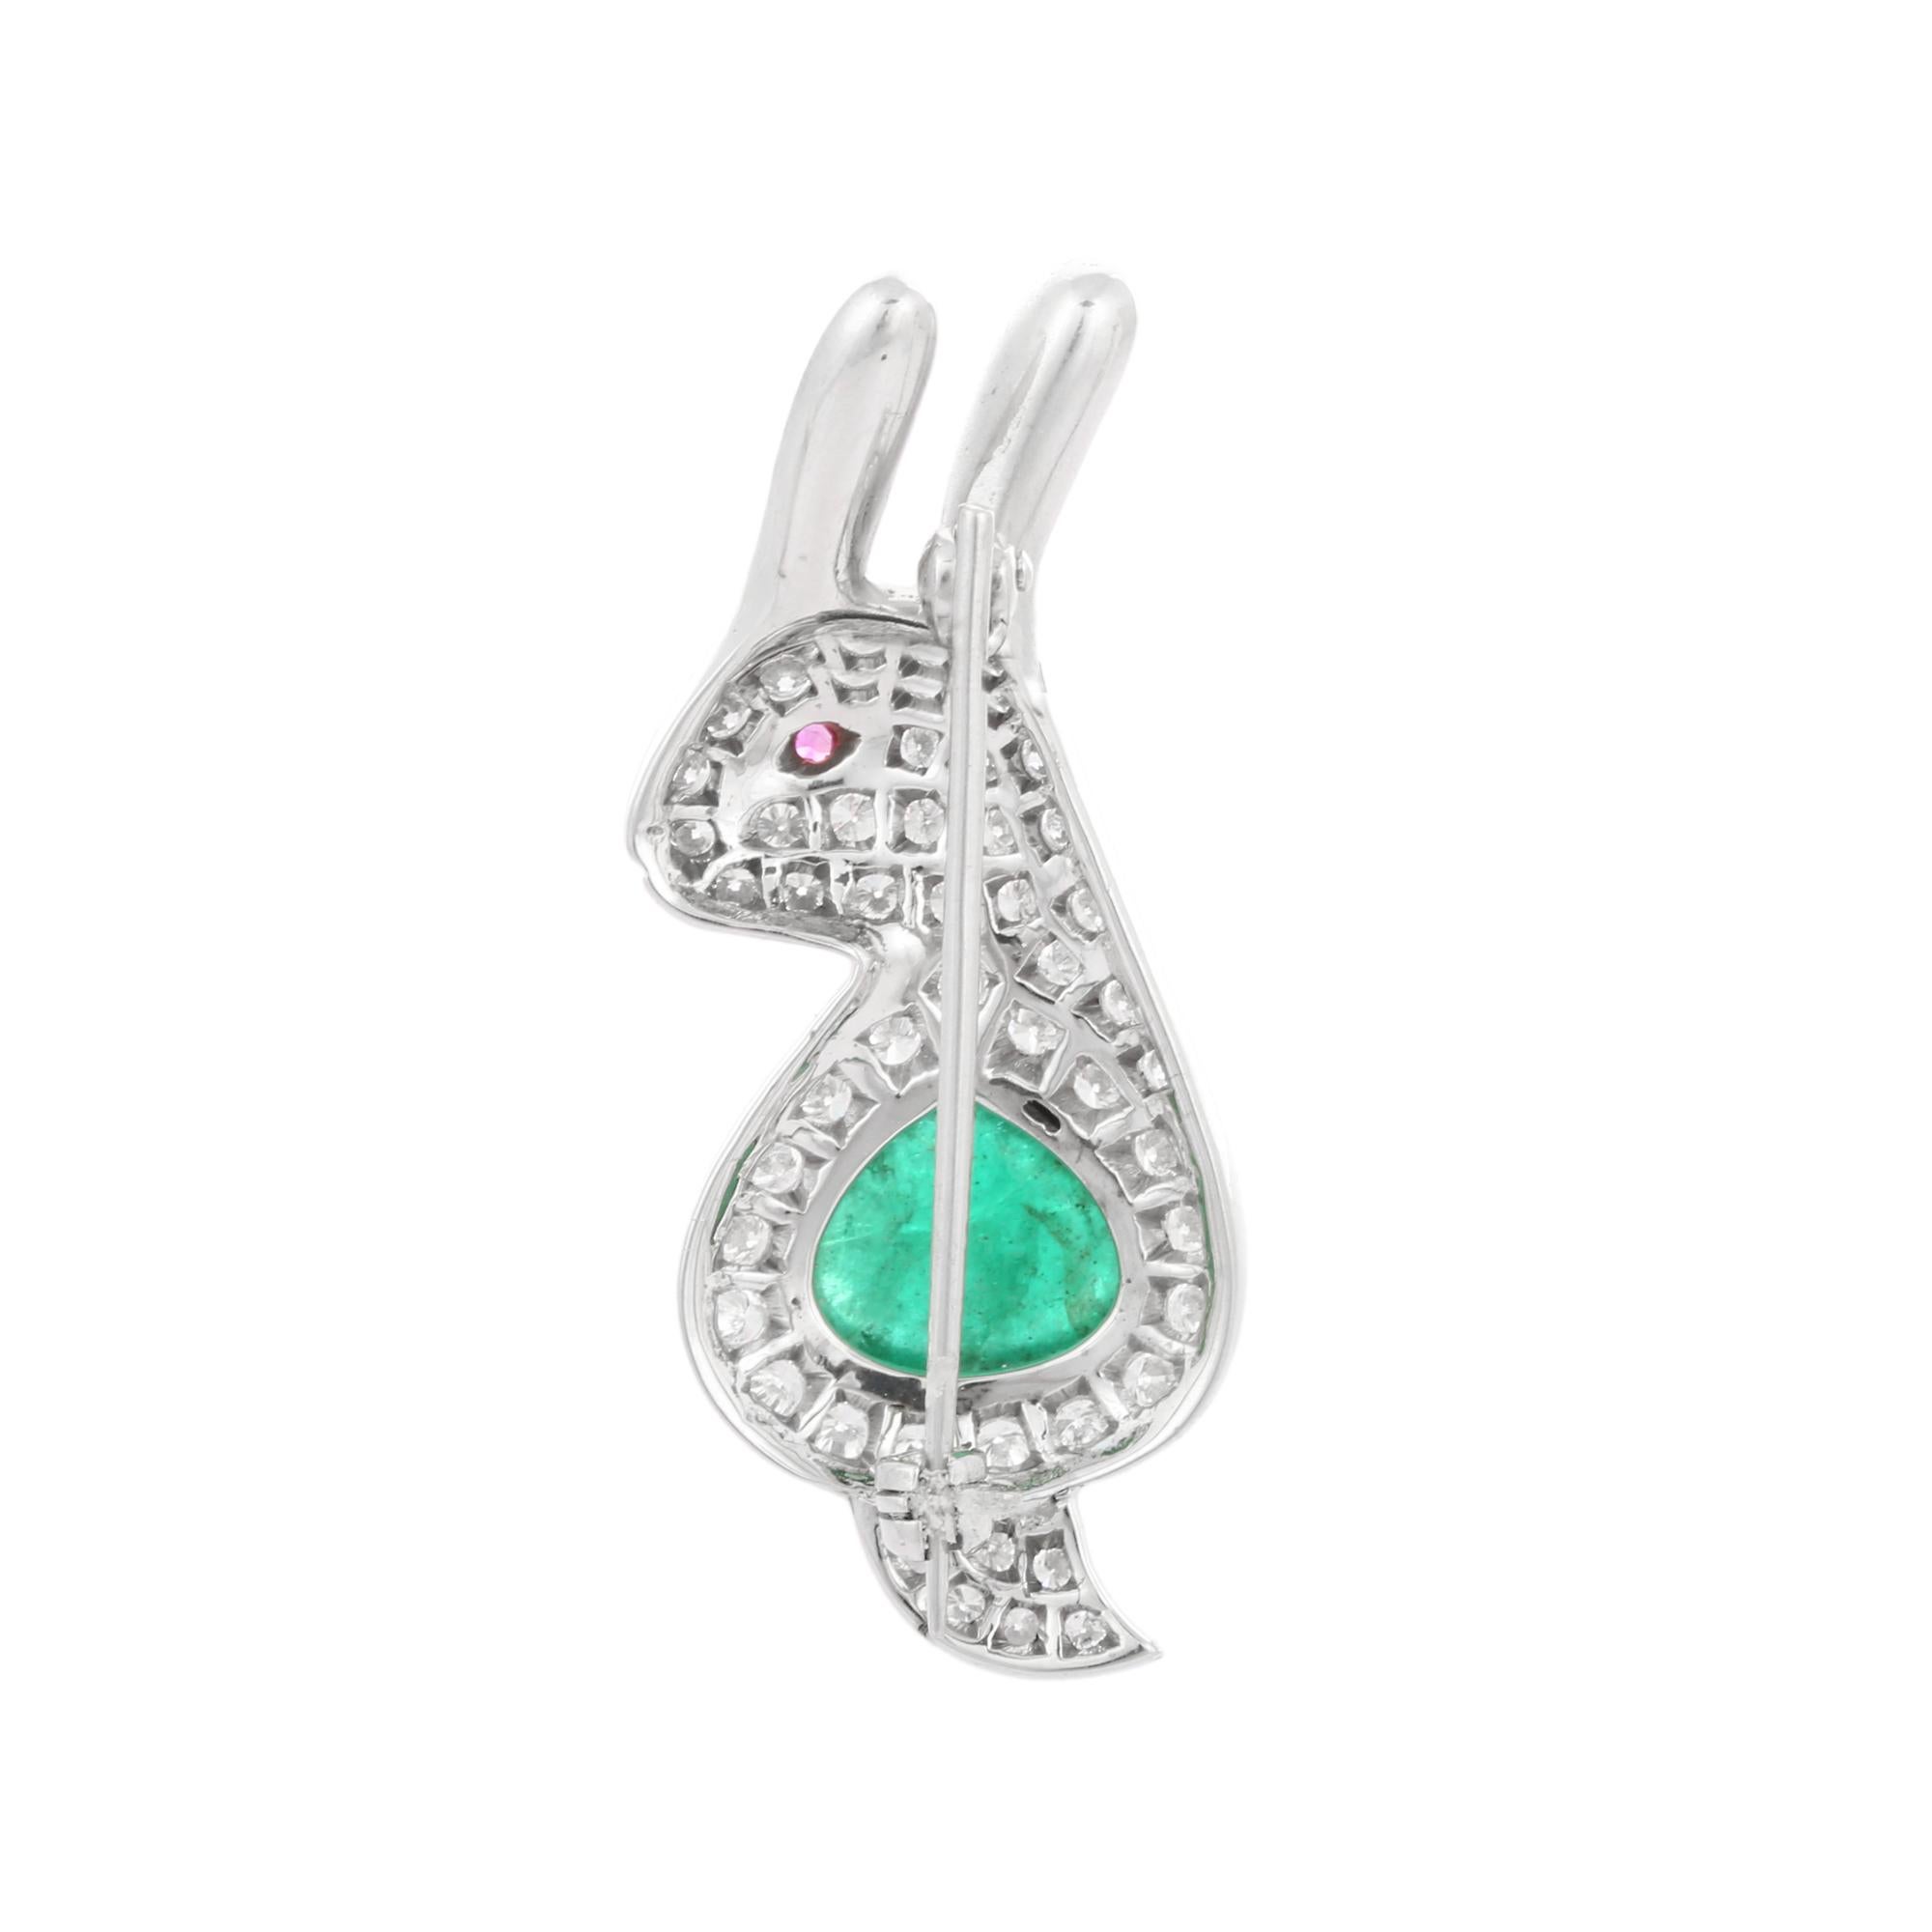 Artist 2.2 Carat Emerald Diamond Rabbit Brooch in 18k Solid White Gold, Unisex Gifts